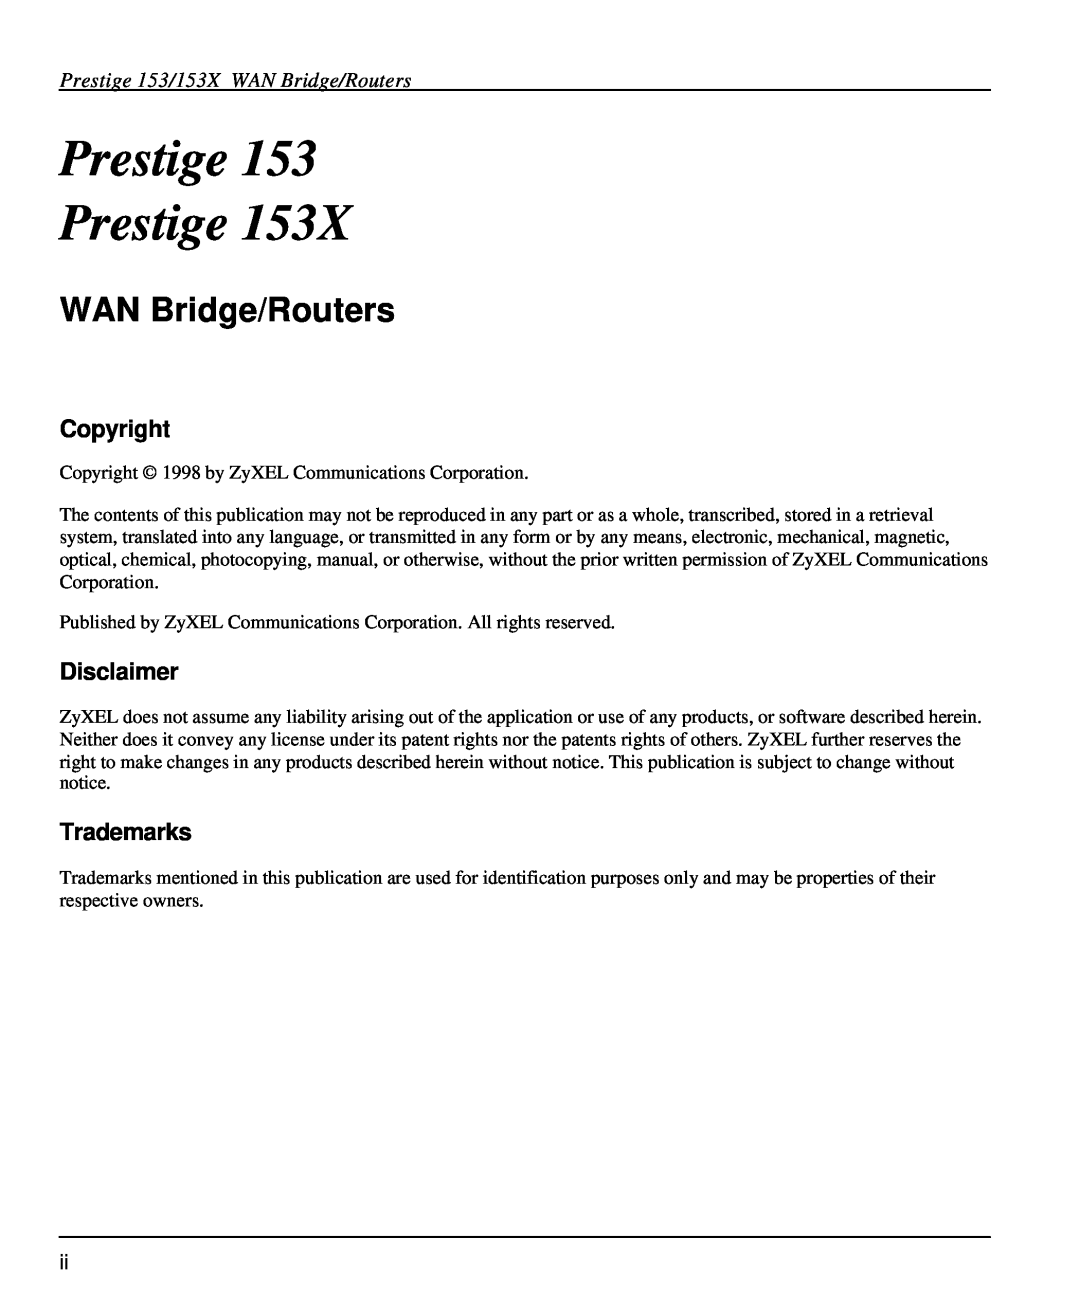 ZyXEL Communications 153X user manual Copyright, Disclaimer, Trademarks, Prestige Prestige, WAN Bridge/Routers 